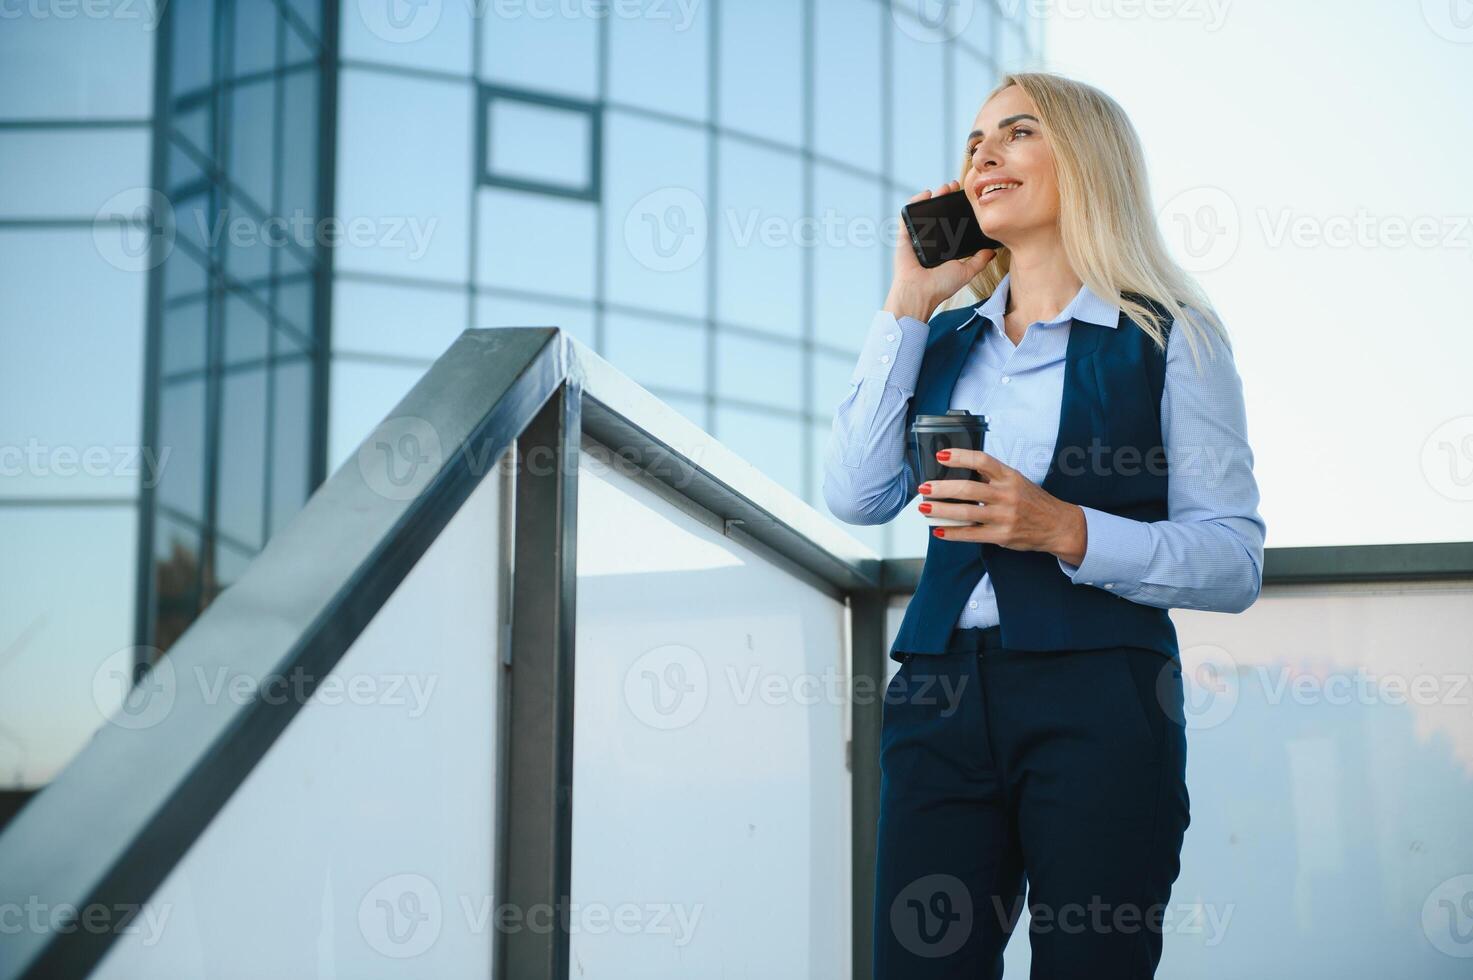 hermosa mujer yendo a trabajo con café caminando cerca oficina edificio. retrato de exitoso negocio mujer participación taza de caliente beber. foto